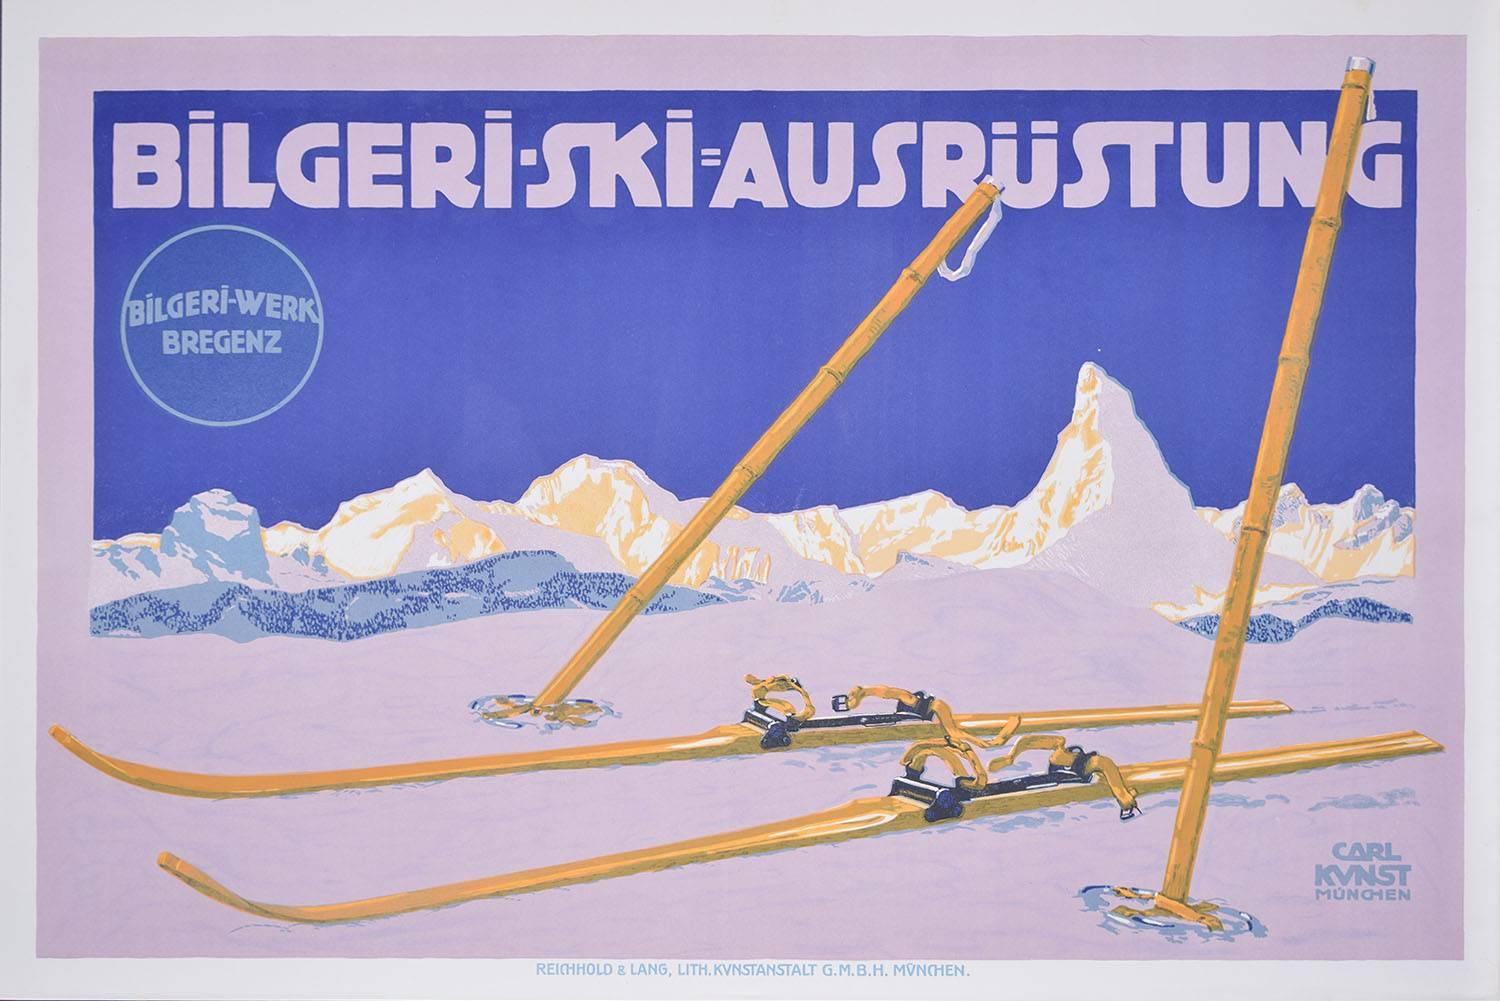 Matterhorn c. 1910 Skiing Original Vintage Poster Bilgeri Ski Carl Kunst Bregenz